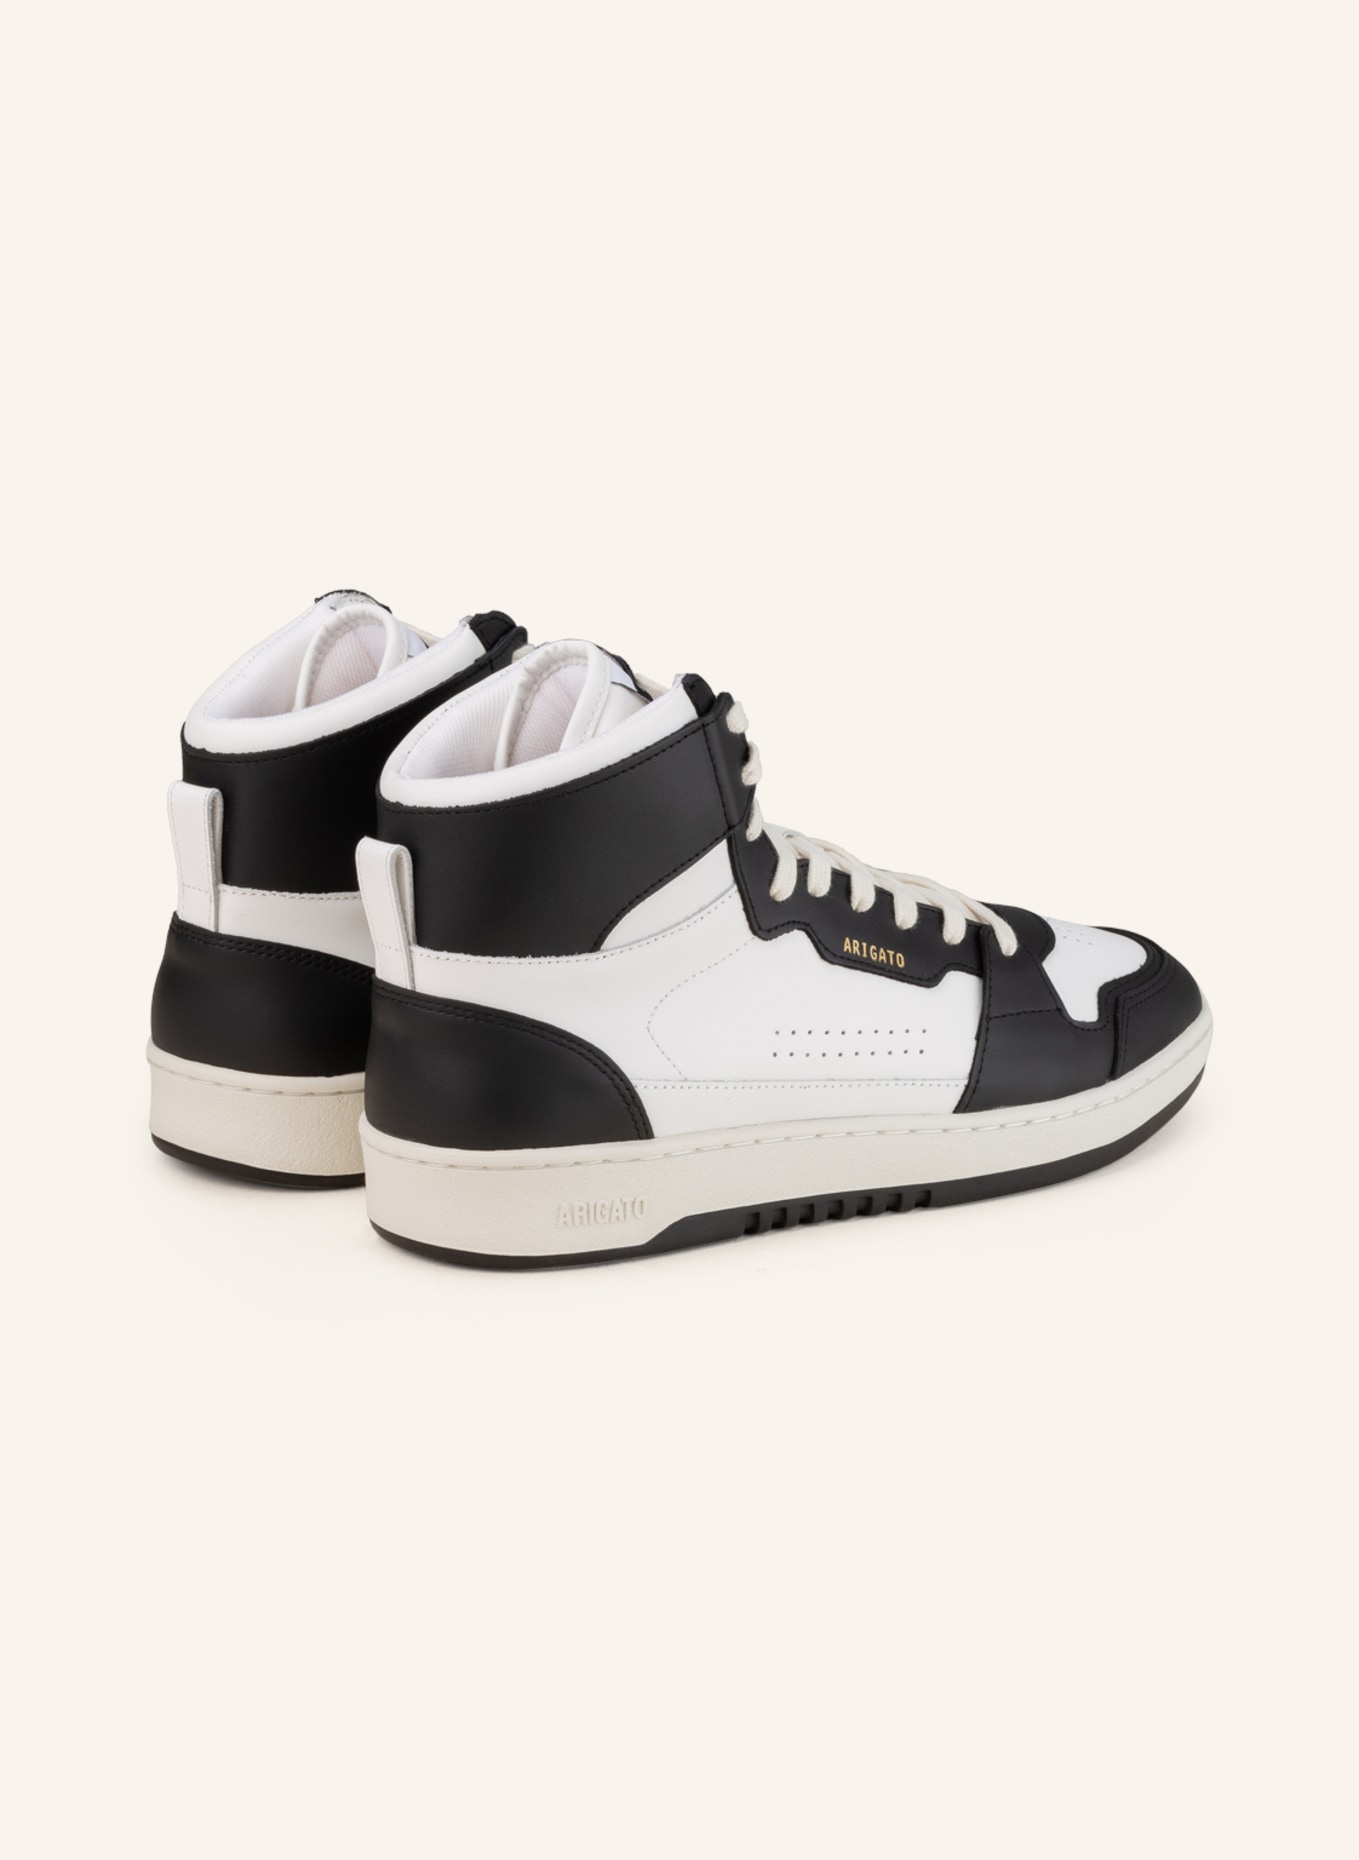 AXEL ARIGATO Hightop-Sneaker DICE, Farbe: WEISS/ SCHWARZ (Bild 2)